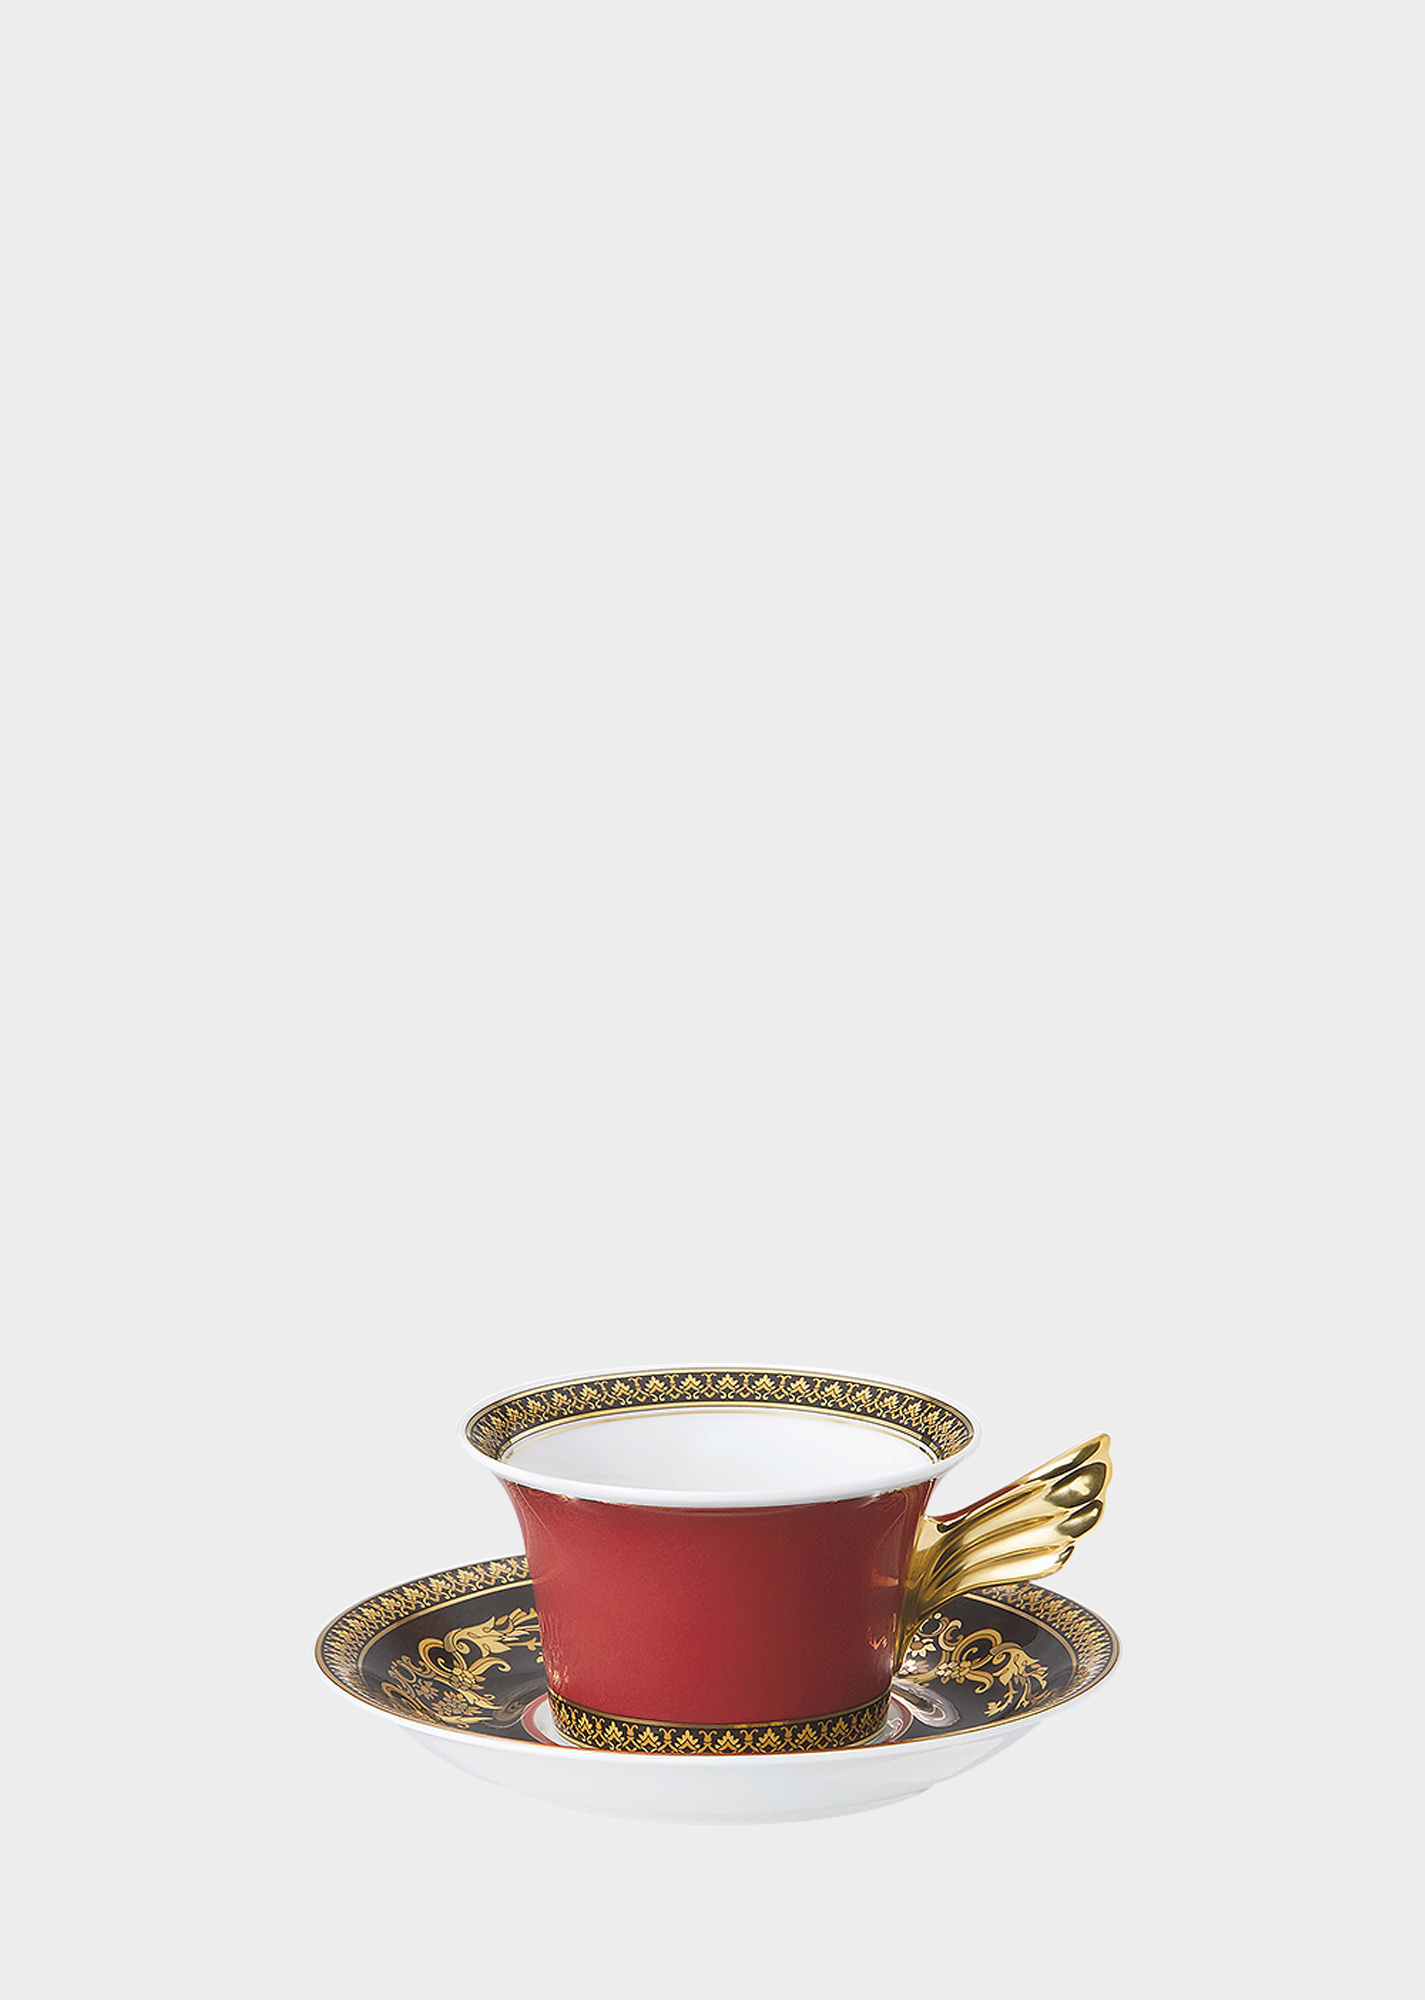 Versace Medusa Tea Cup & Saucer - Home Collection | US Online Store